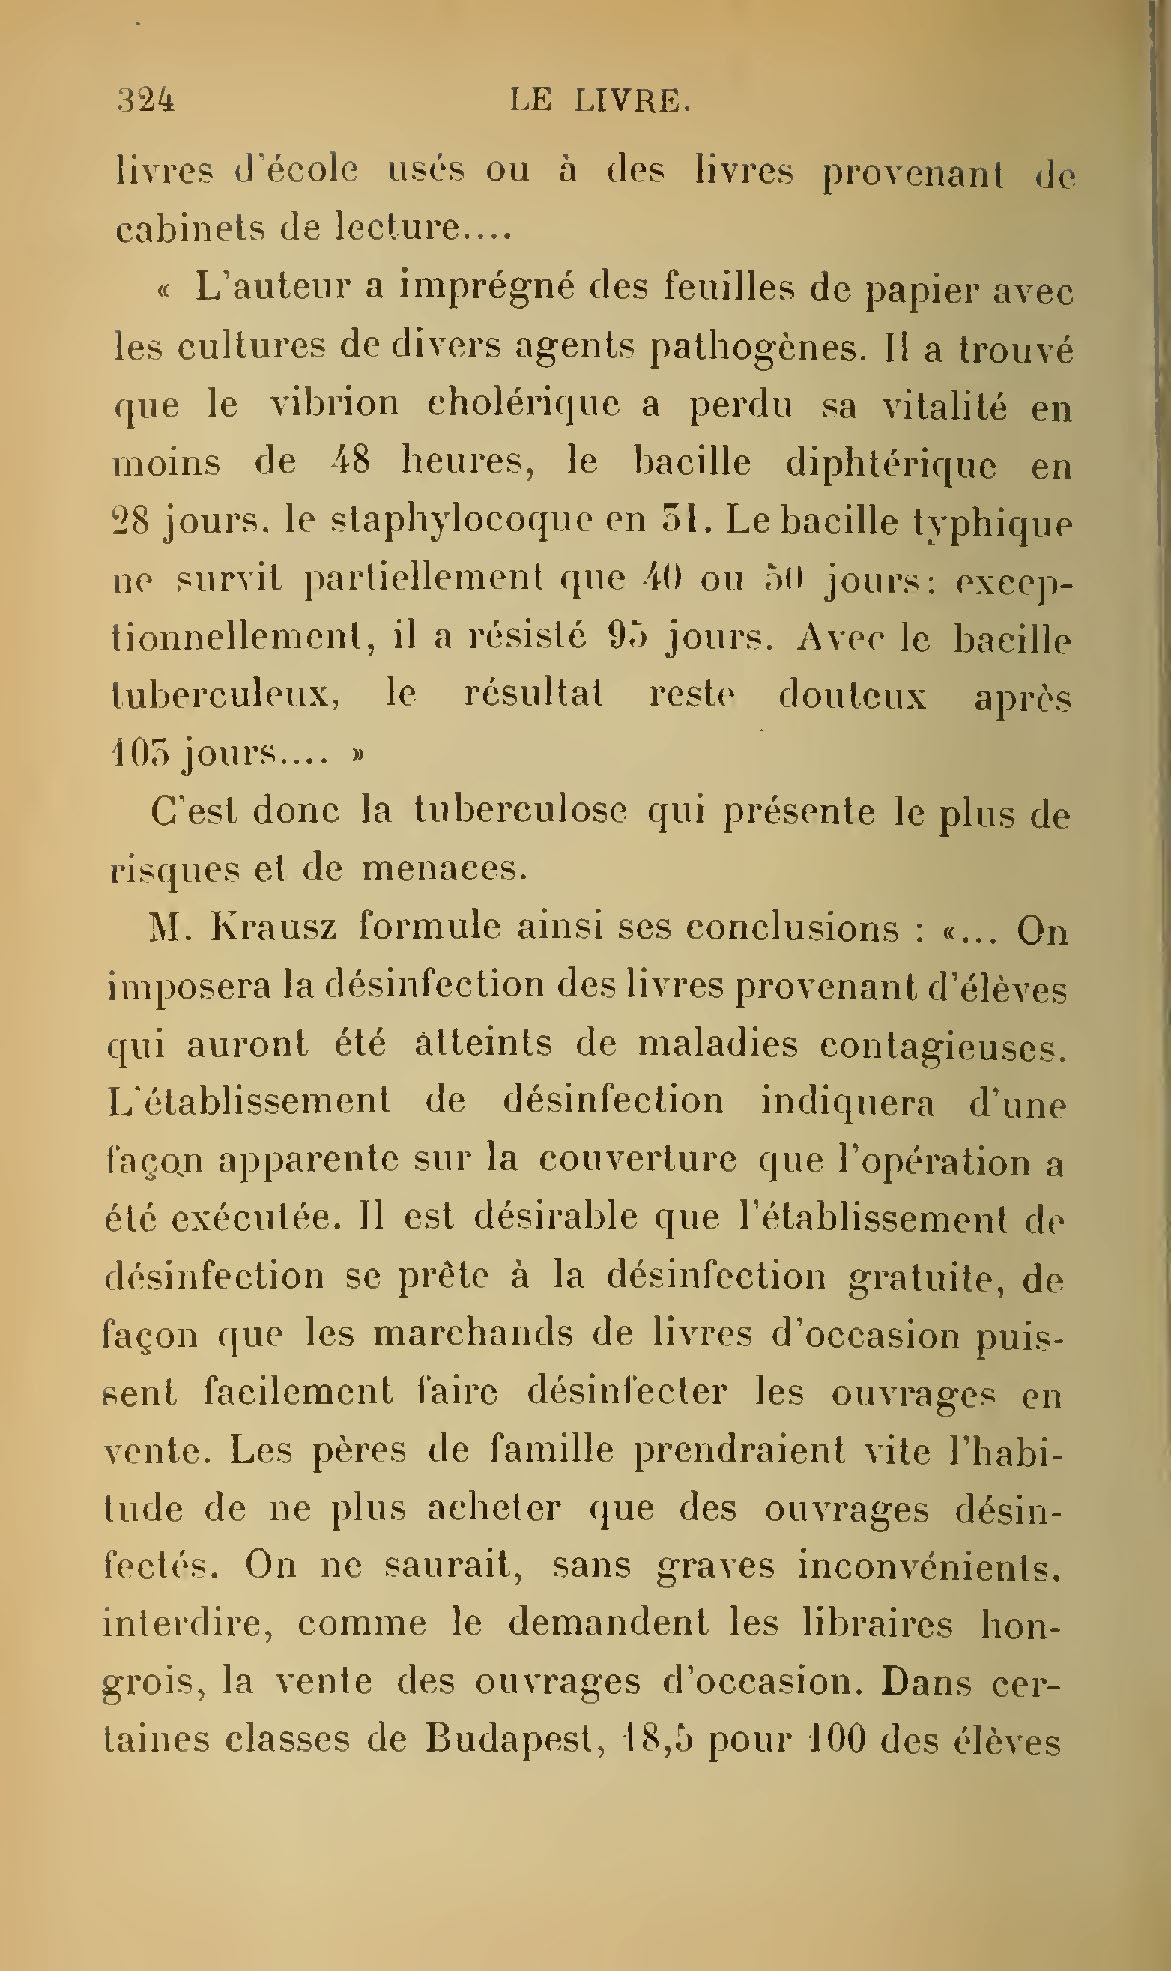 Albert Cim, Le Livre, t. II, p. 324.